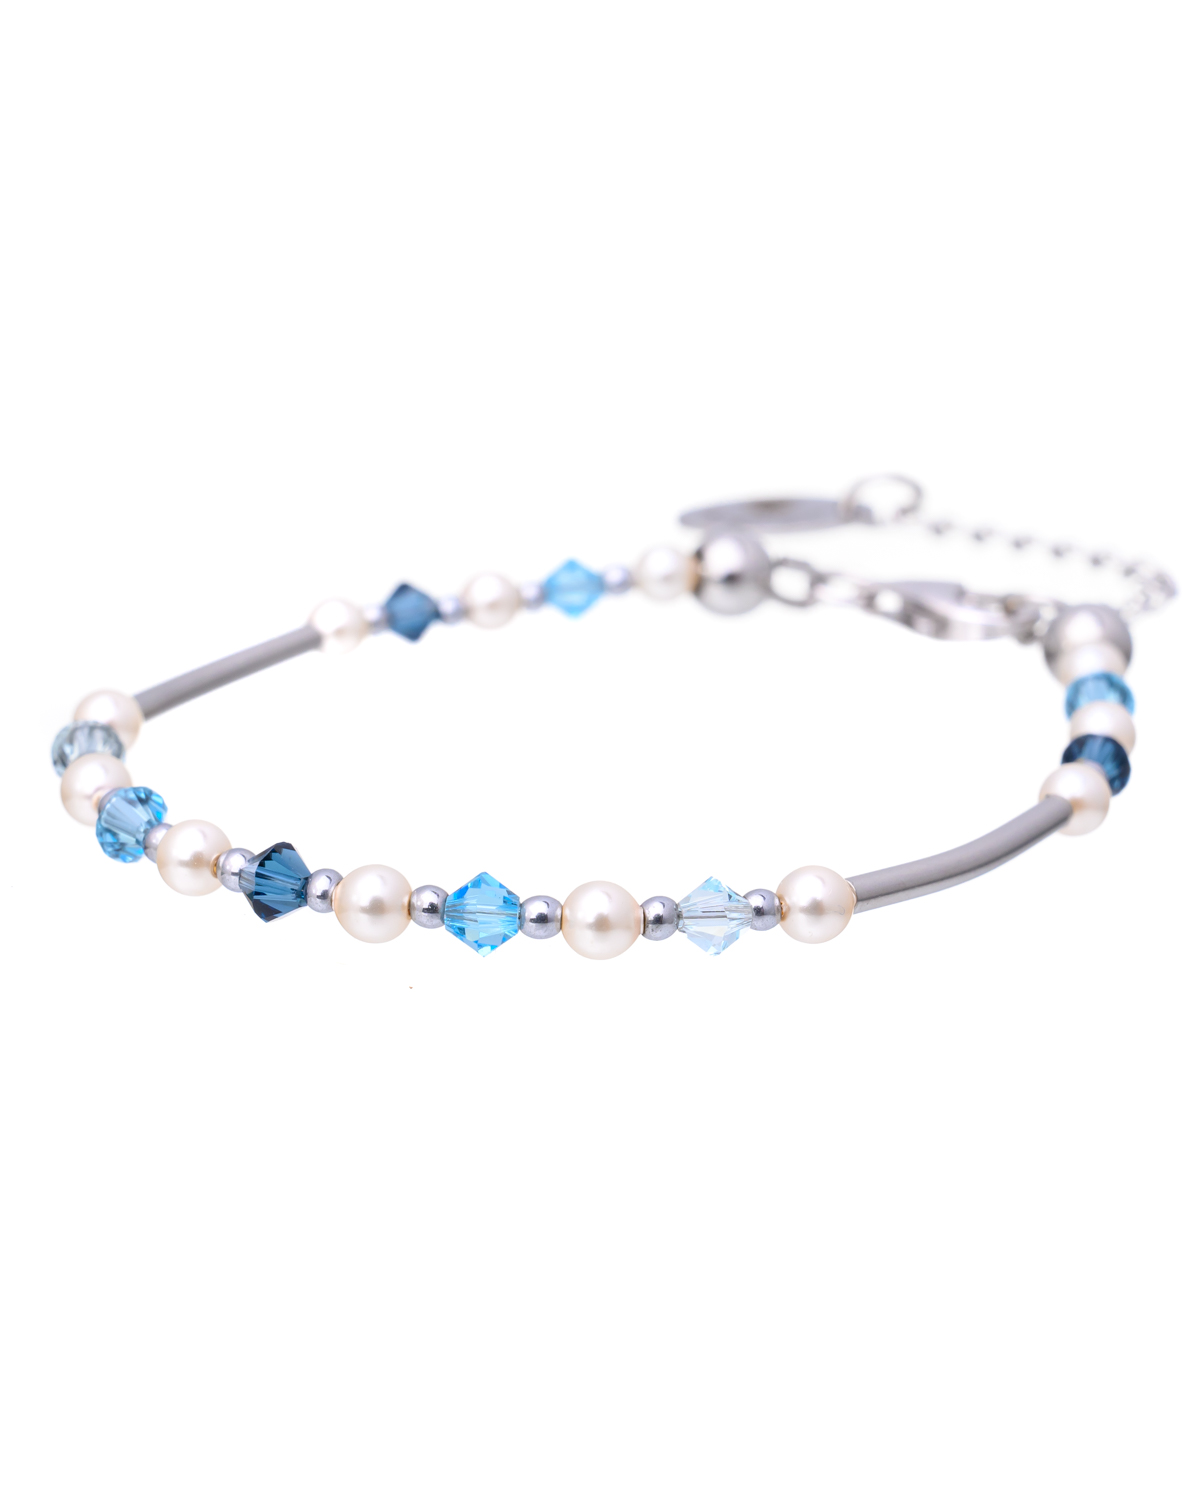 Crystal and Pearls Bracelet - Blue tones